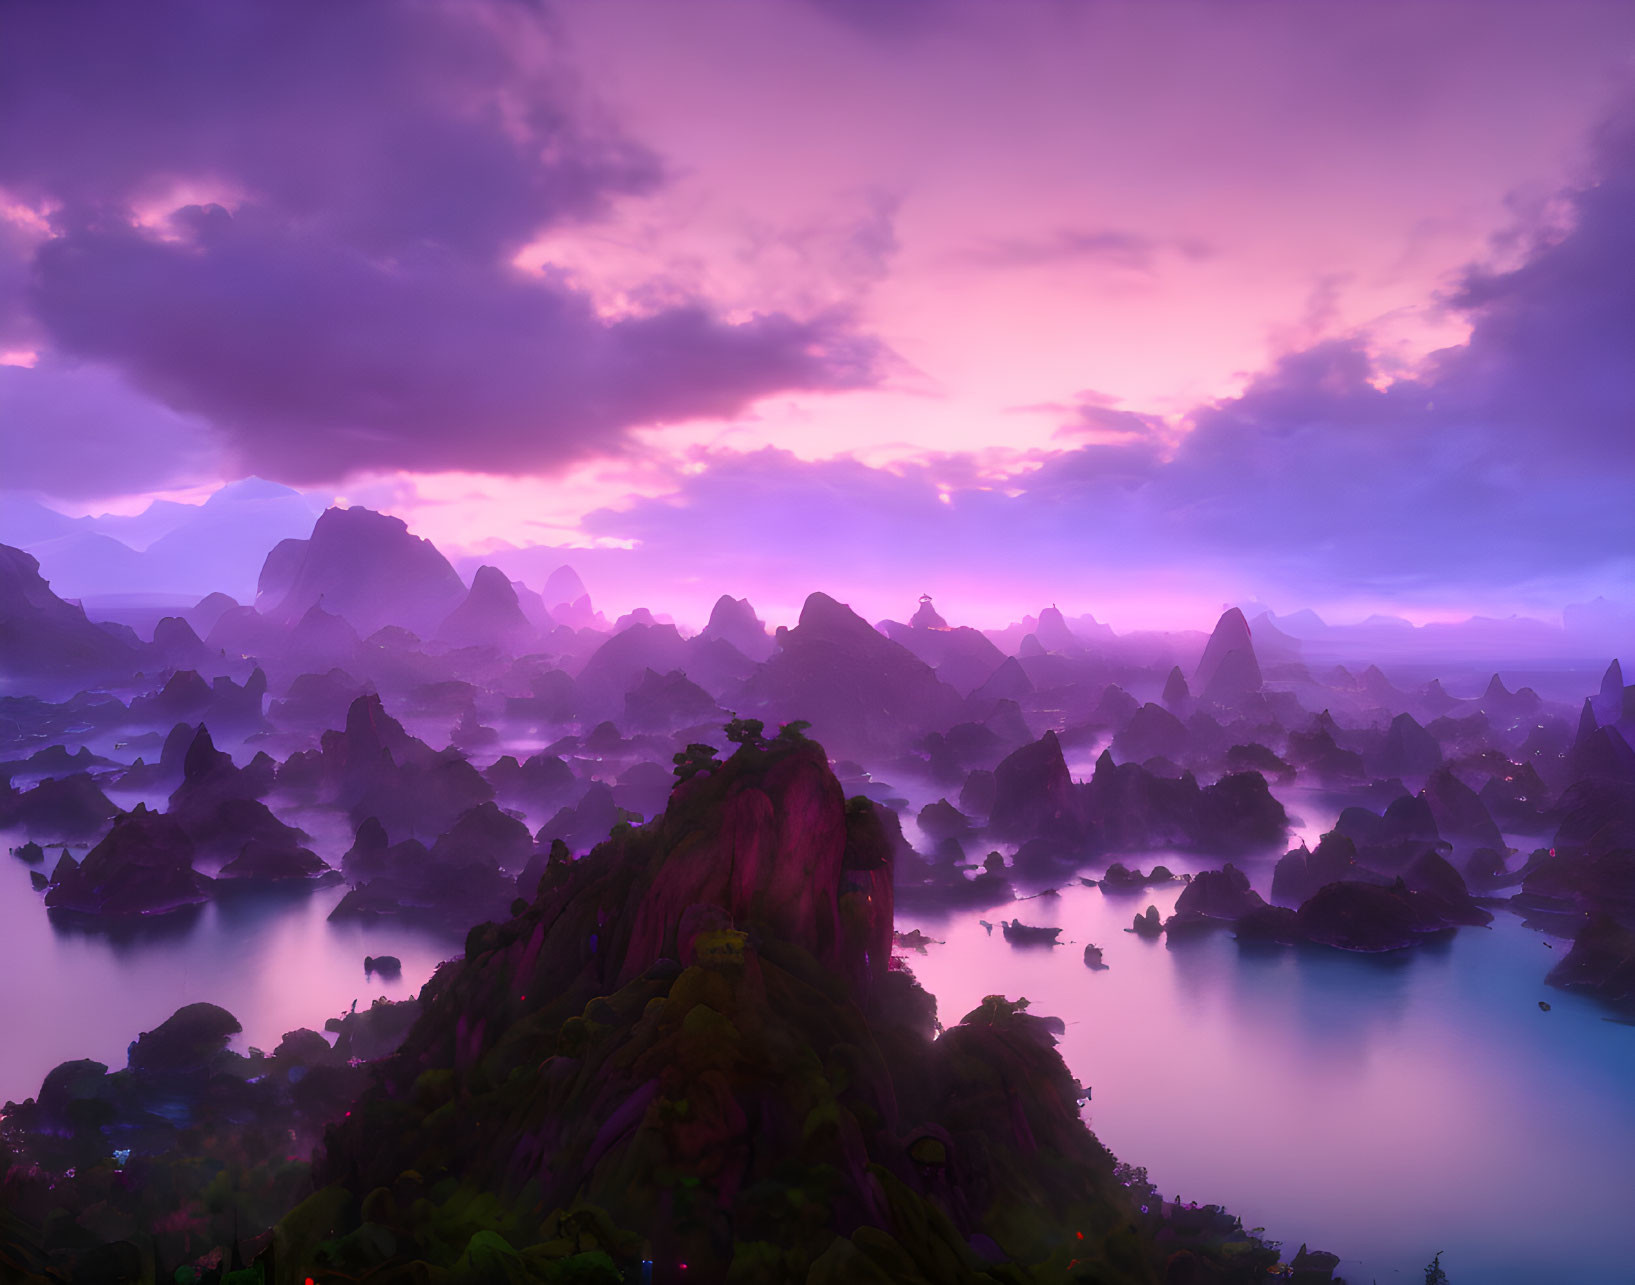 Mystical landscape with jagged peaks, serene lake, lush greenery, vibrant purple sky